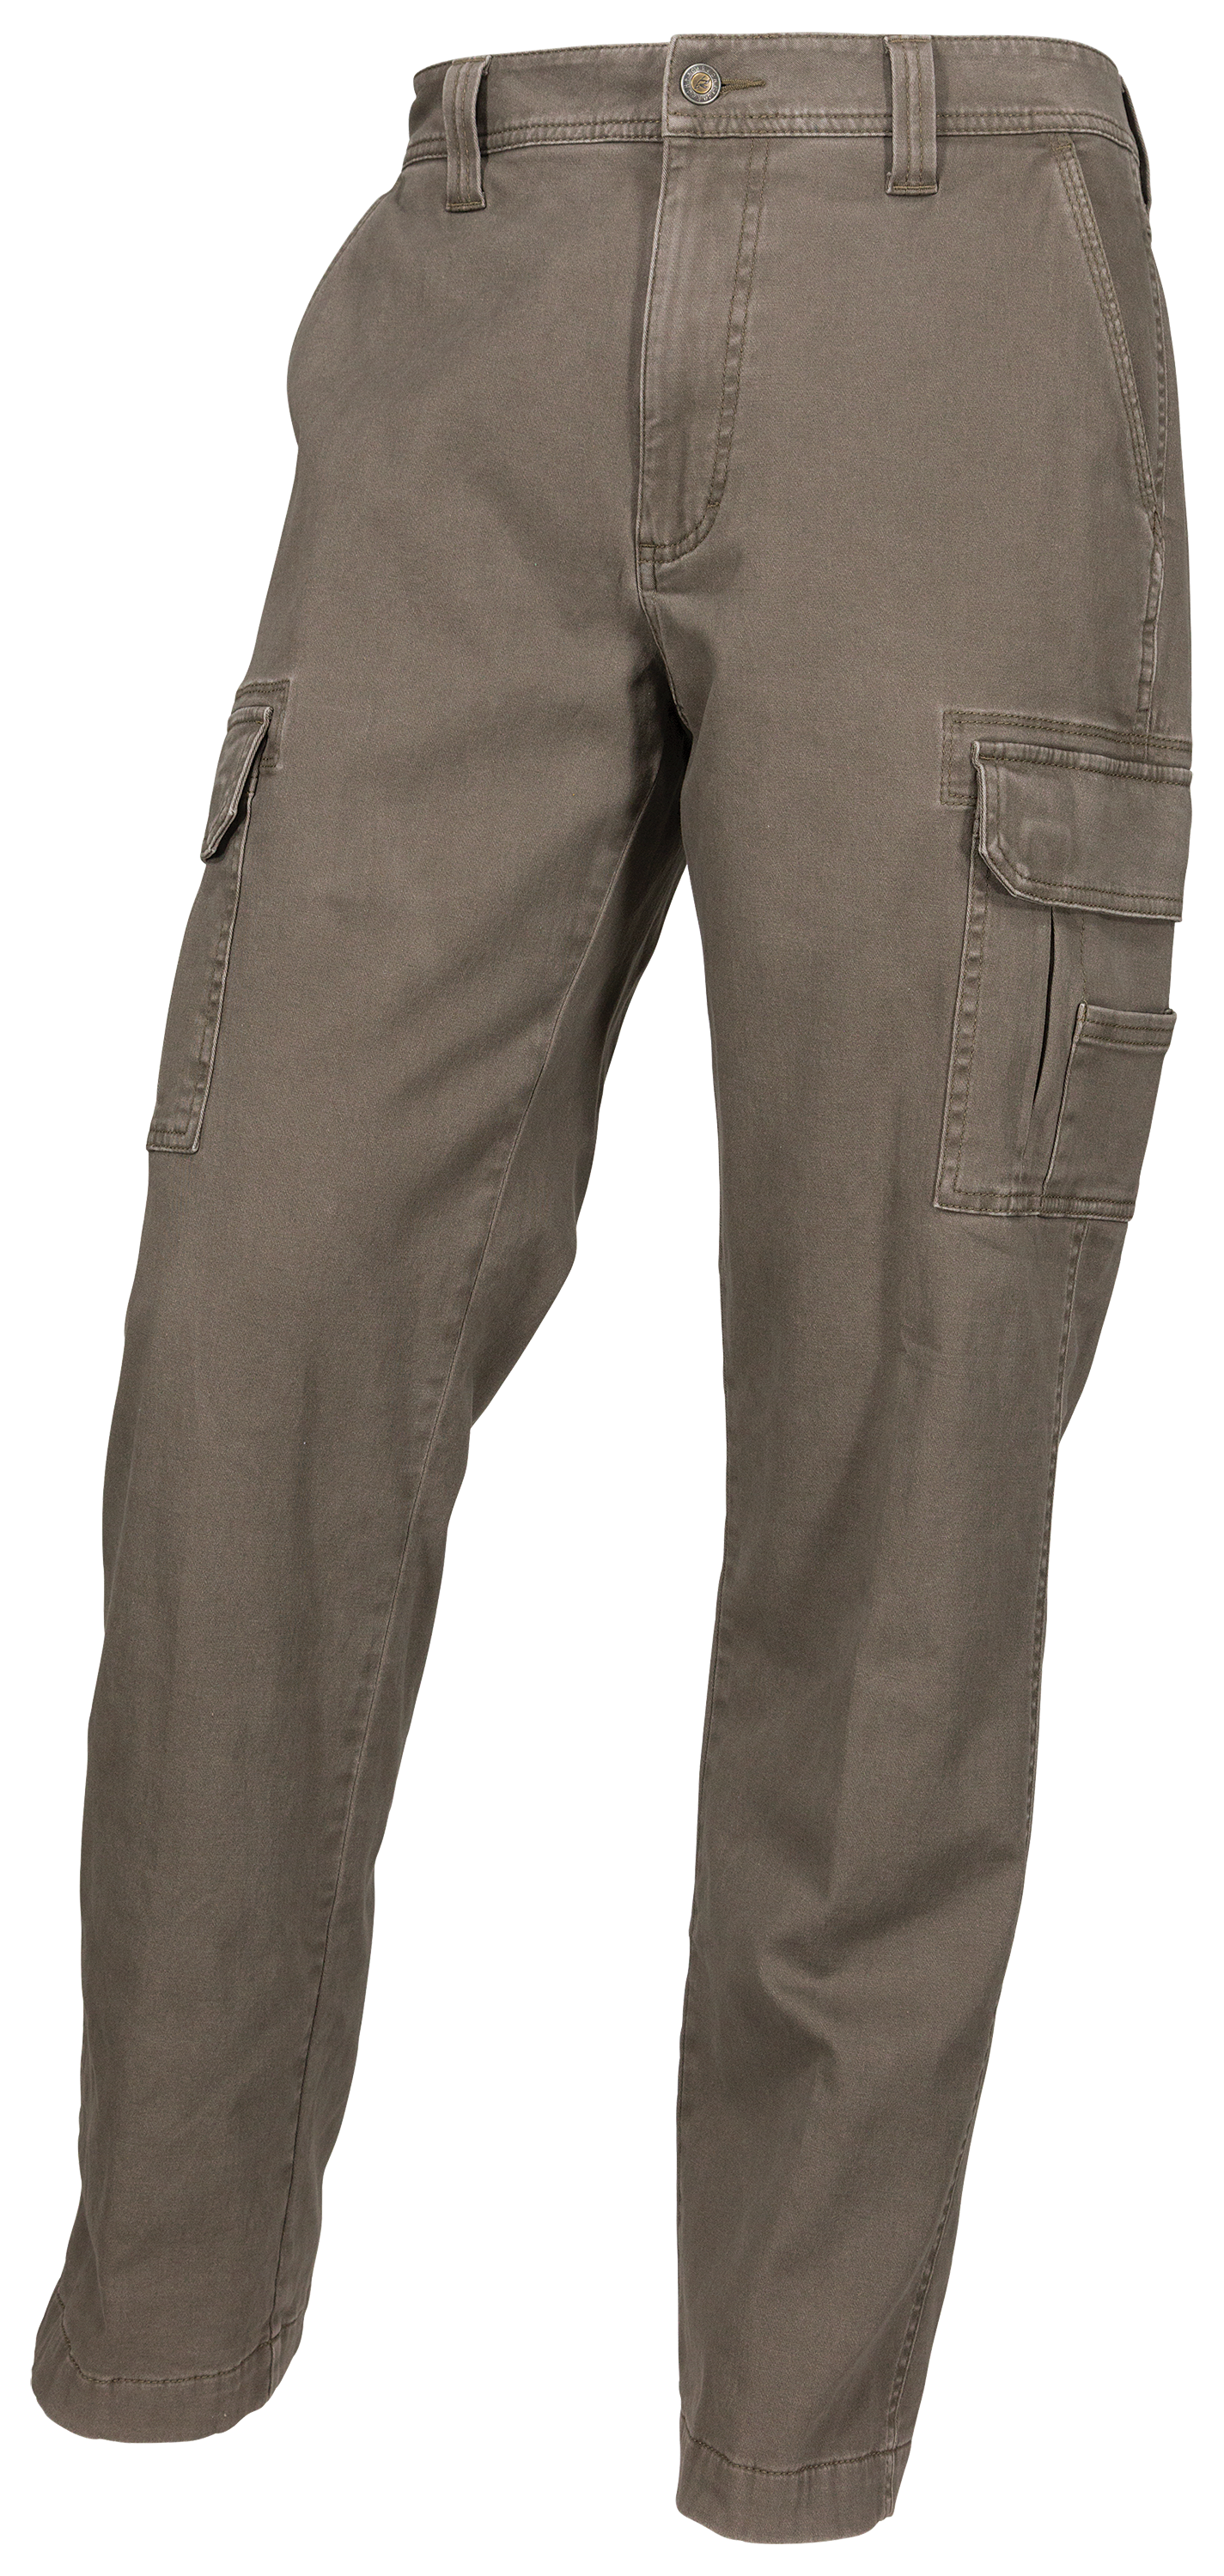 RedHead Fulton Flex Fit Flannel-Lined Cargo Pants for Men